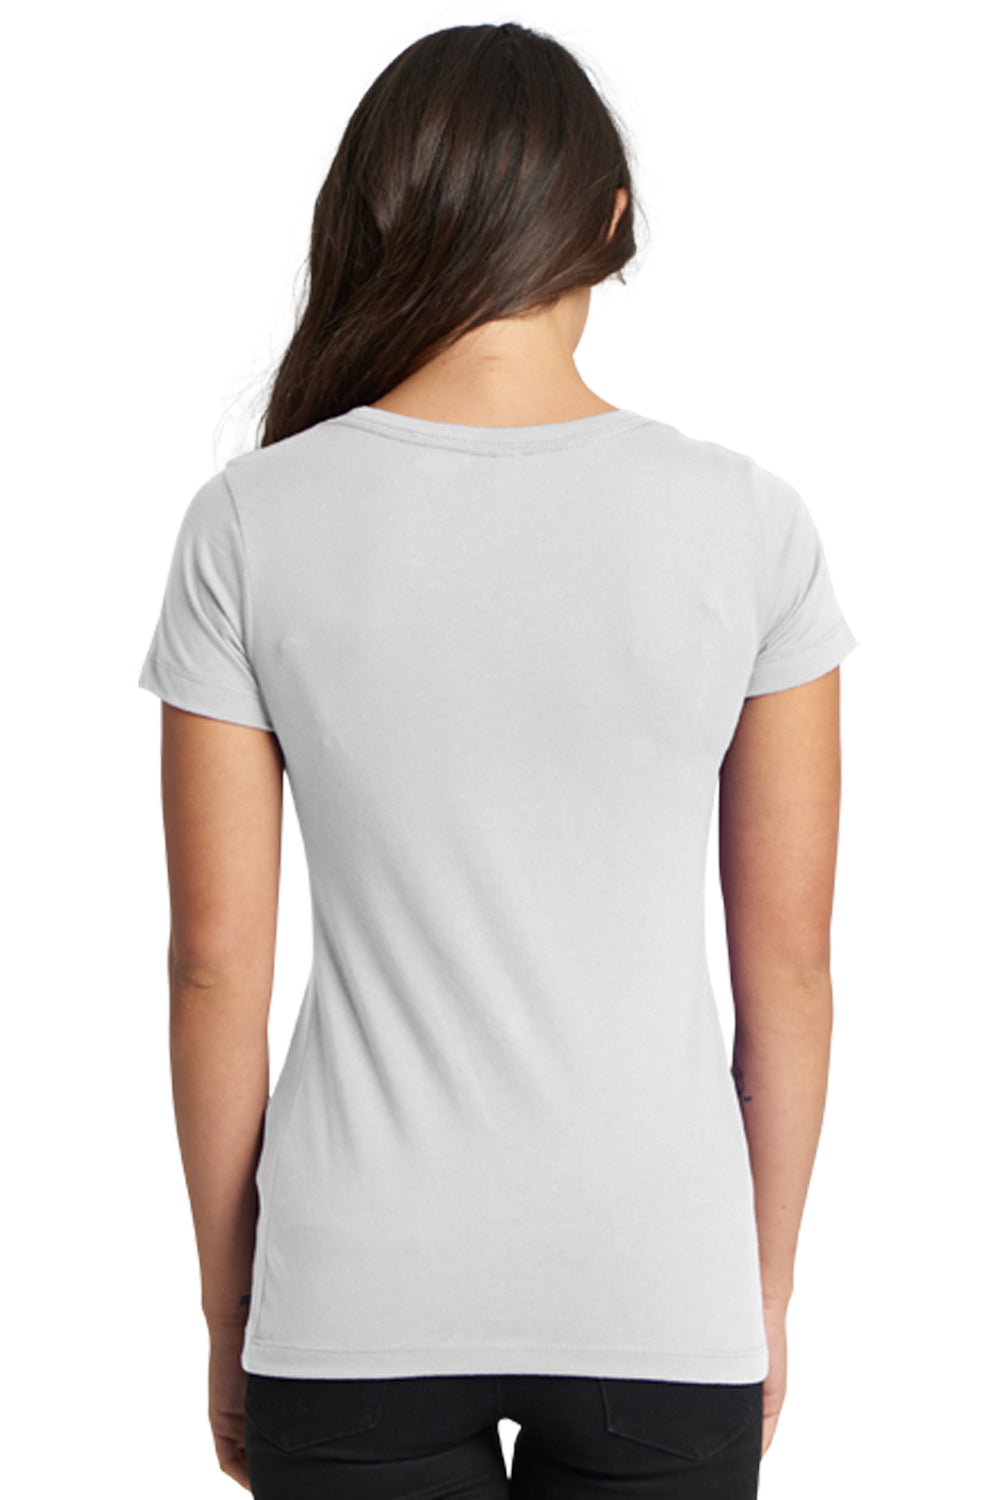 Next Level N1510 Womens Ideal Jersey Short Sleeve Crewneck T-Shirt White Back